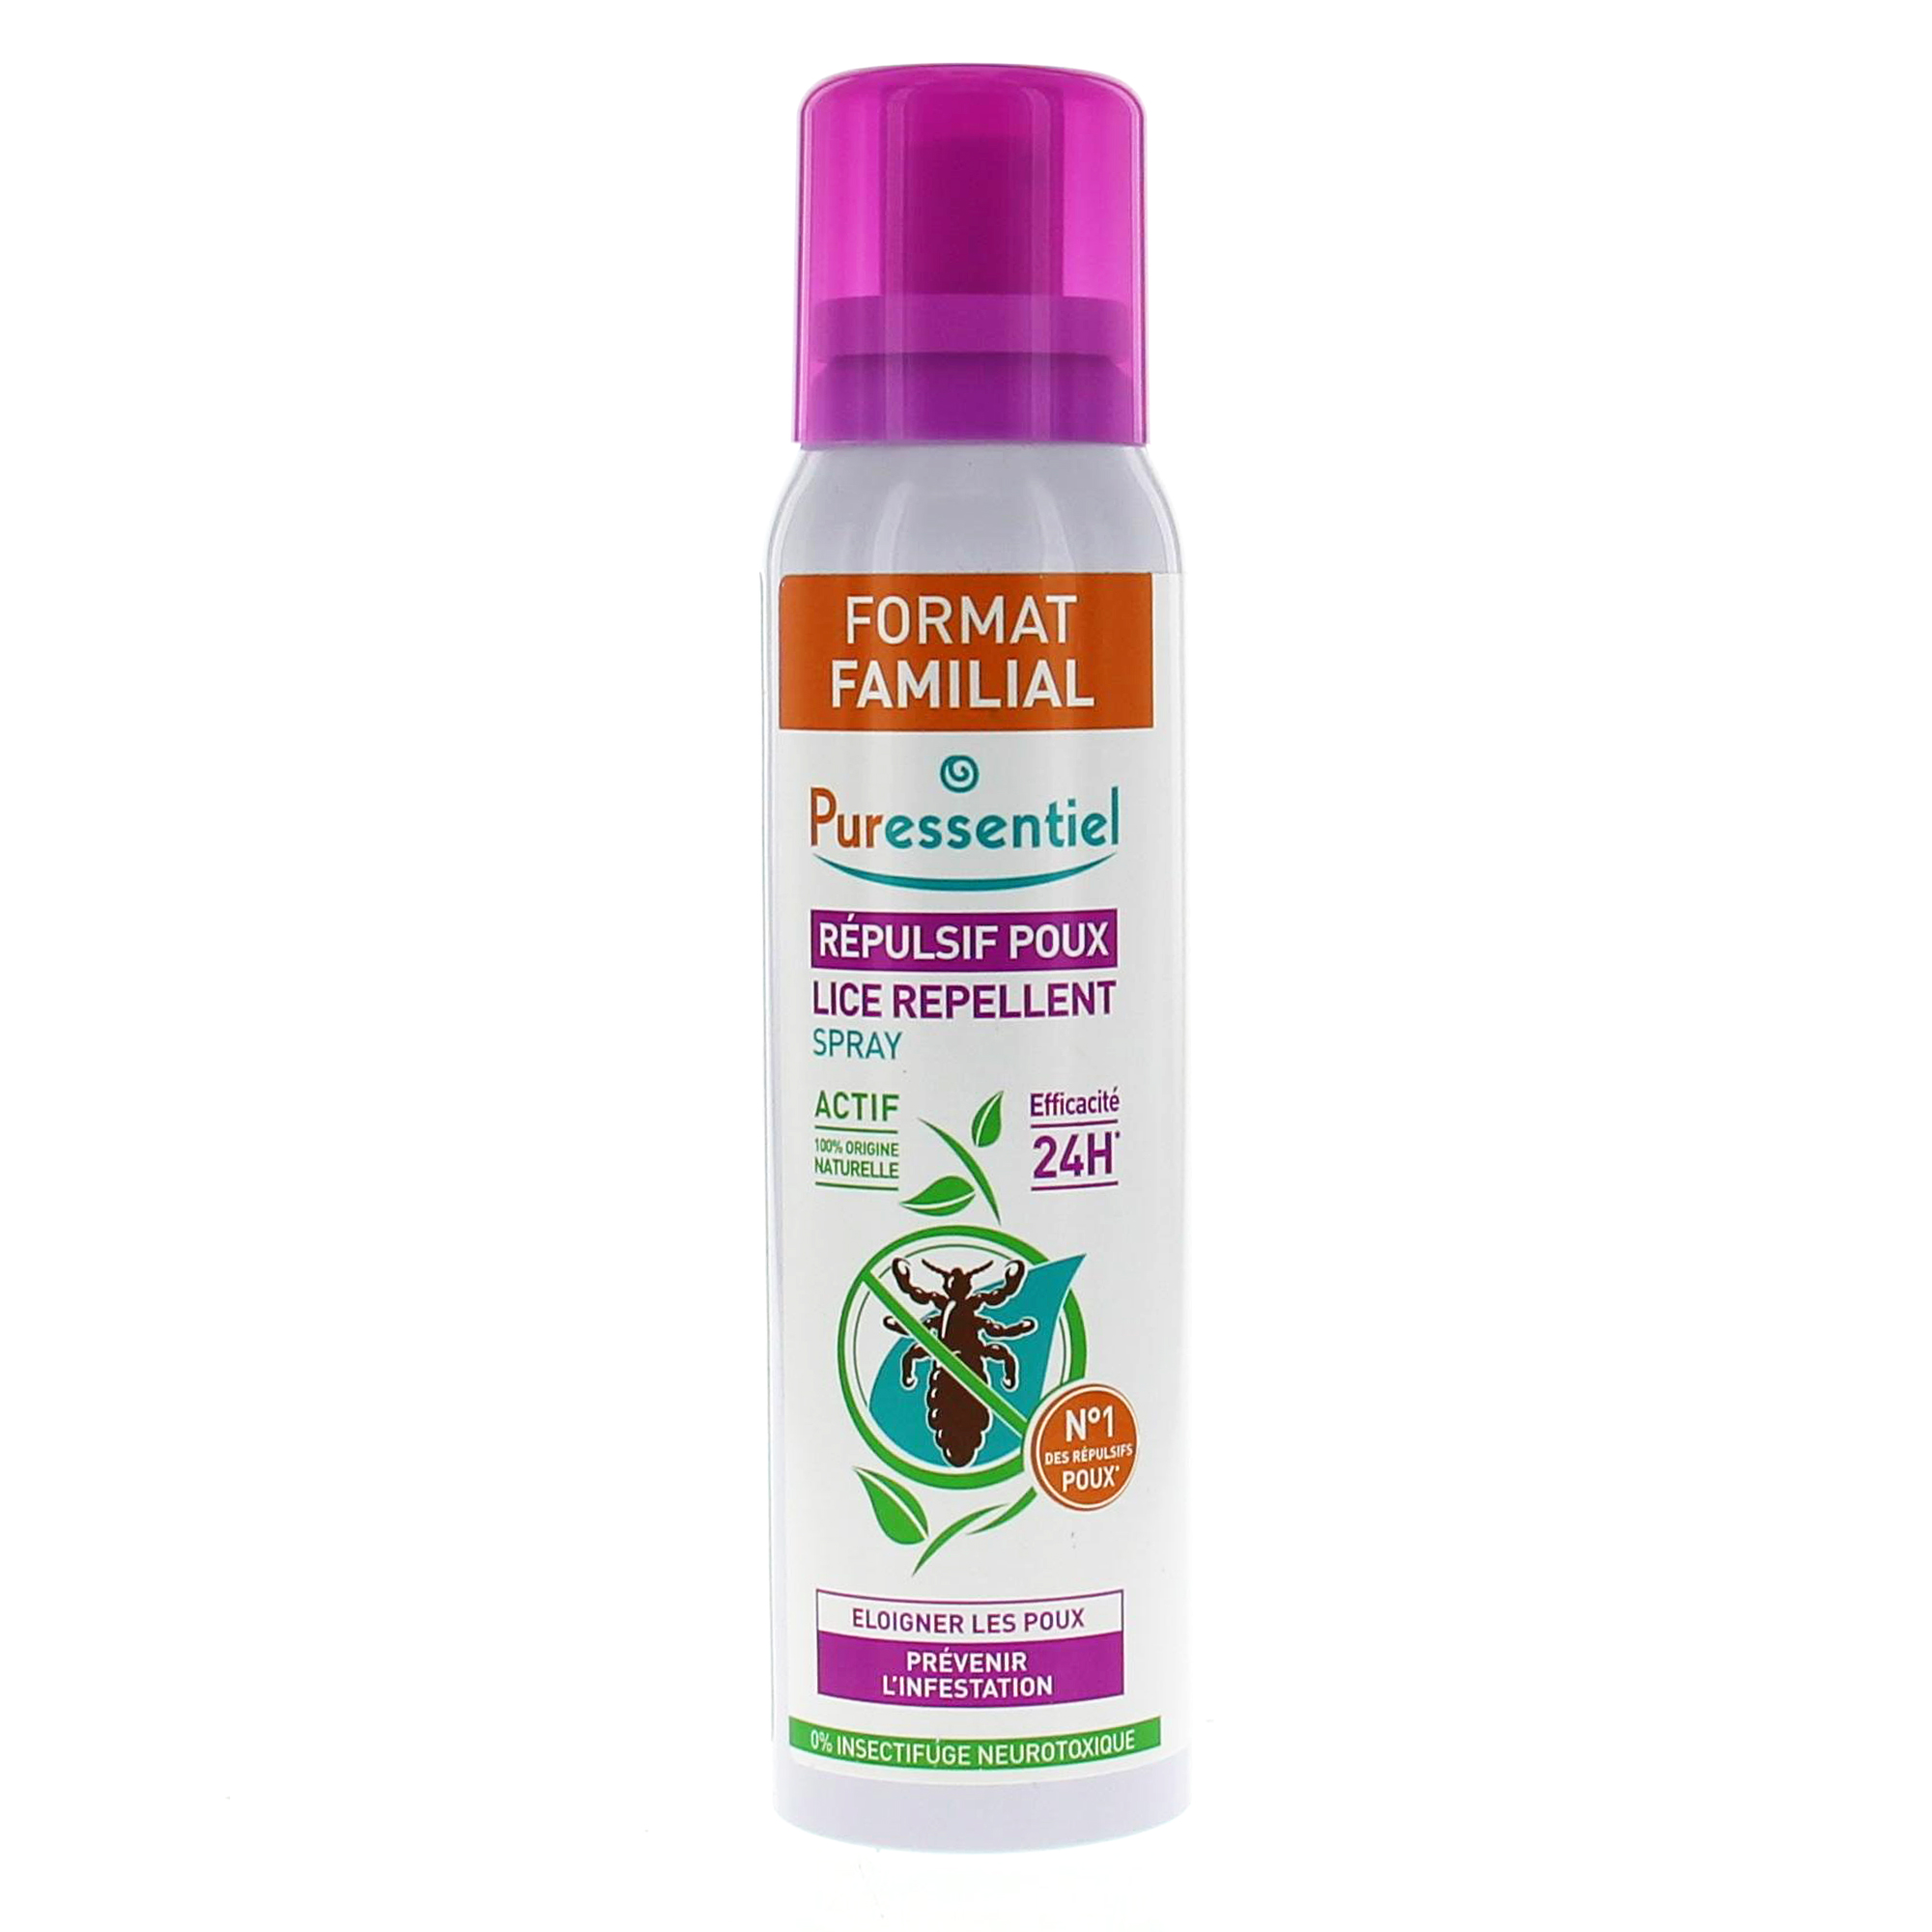 Puressentiel Anti-Poux Spray Repulsif 24h 200ml - Citymall